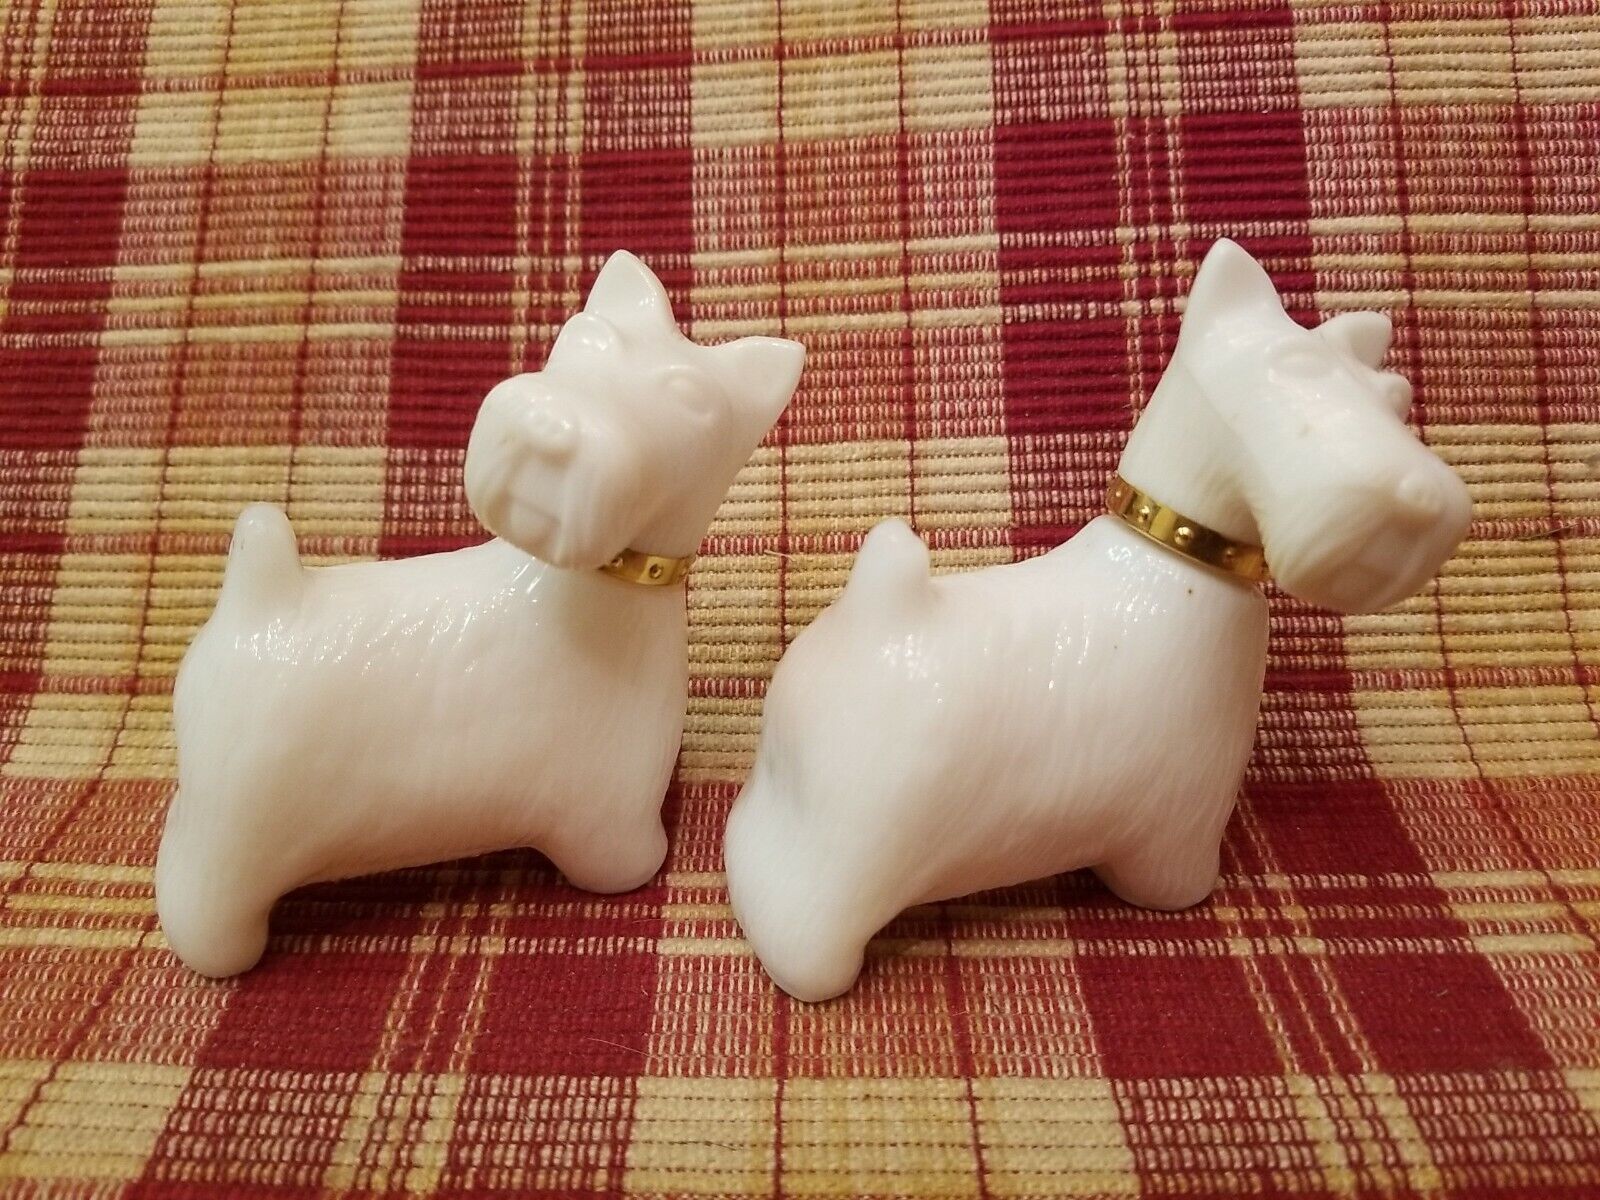 2 Avon White Scottie Dogs Perfume Bottles with Gold Collars